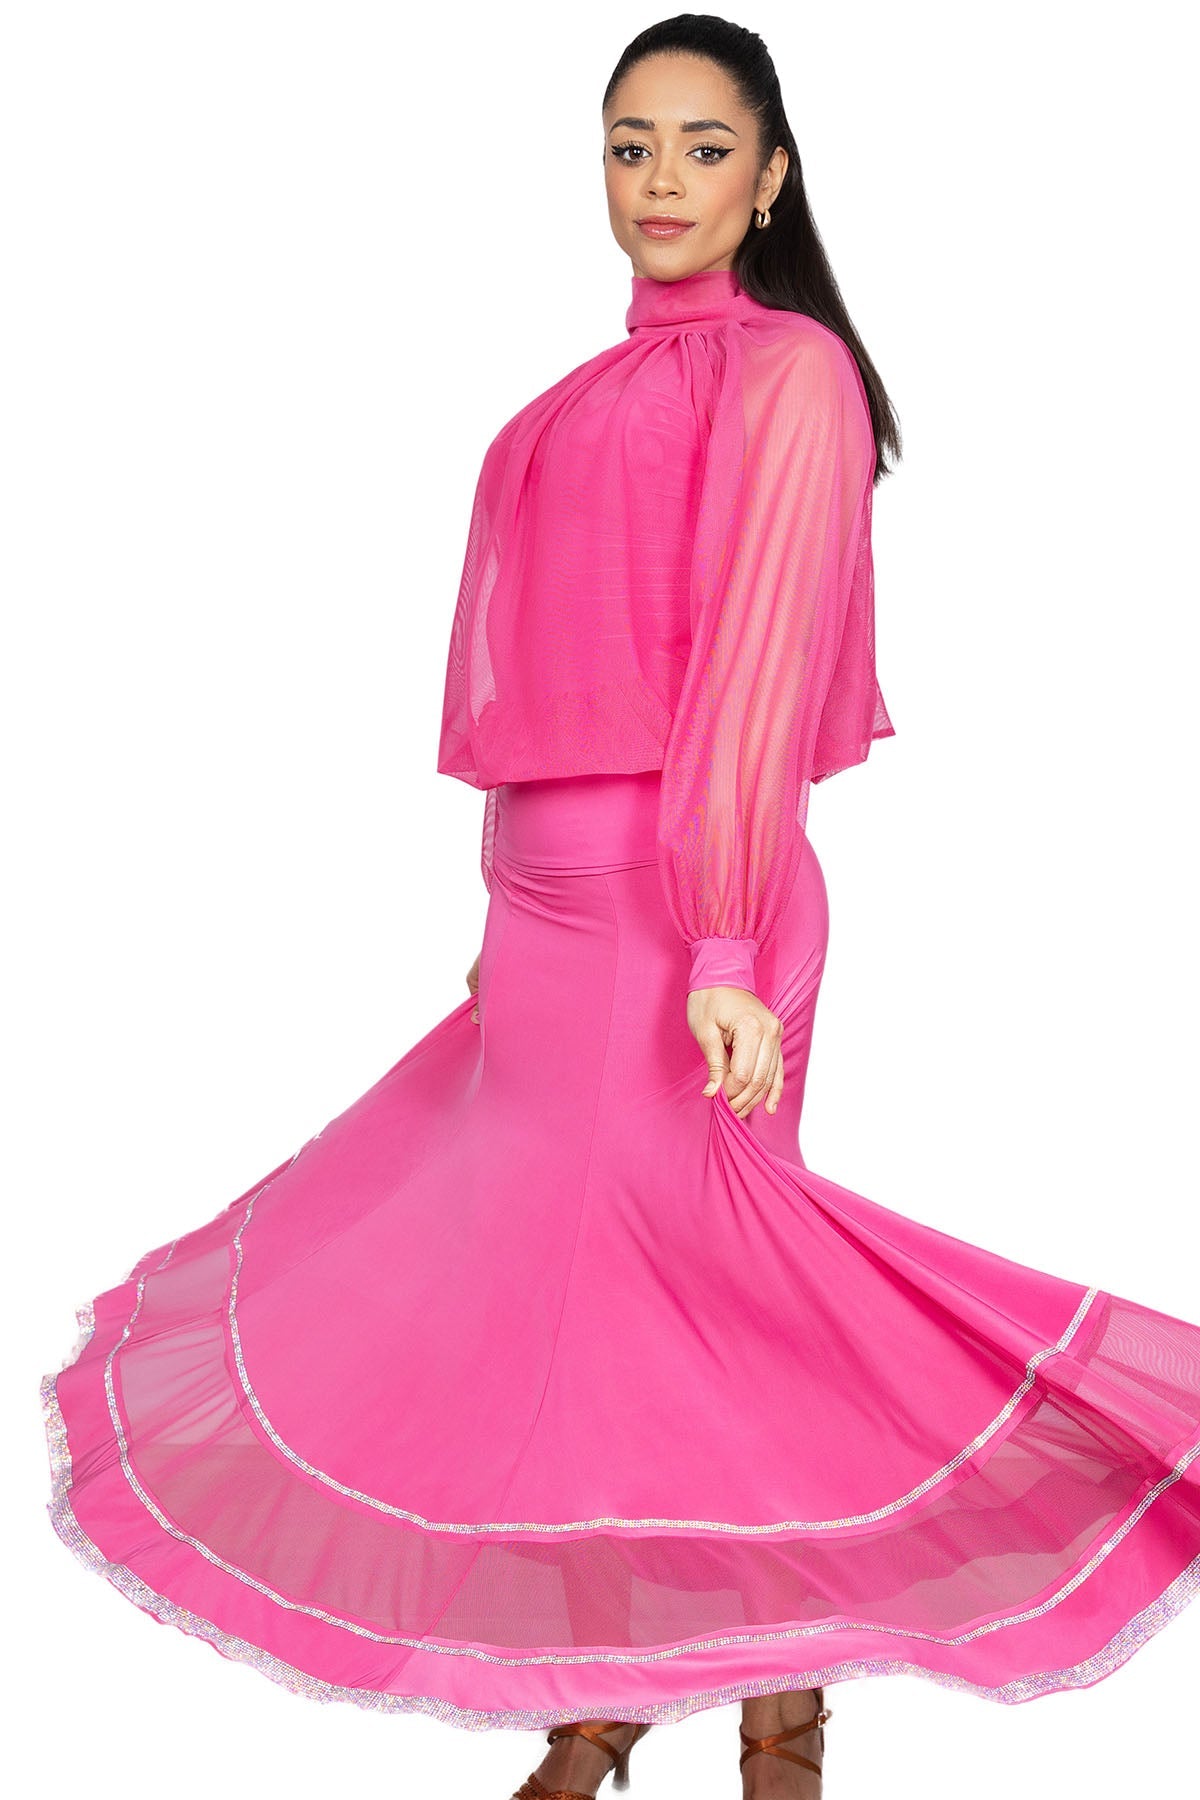 Women's pink dancing skirt with rhinestones